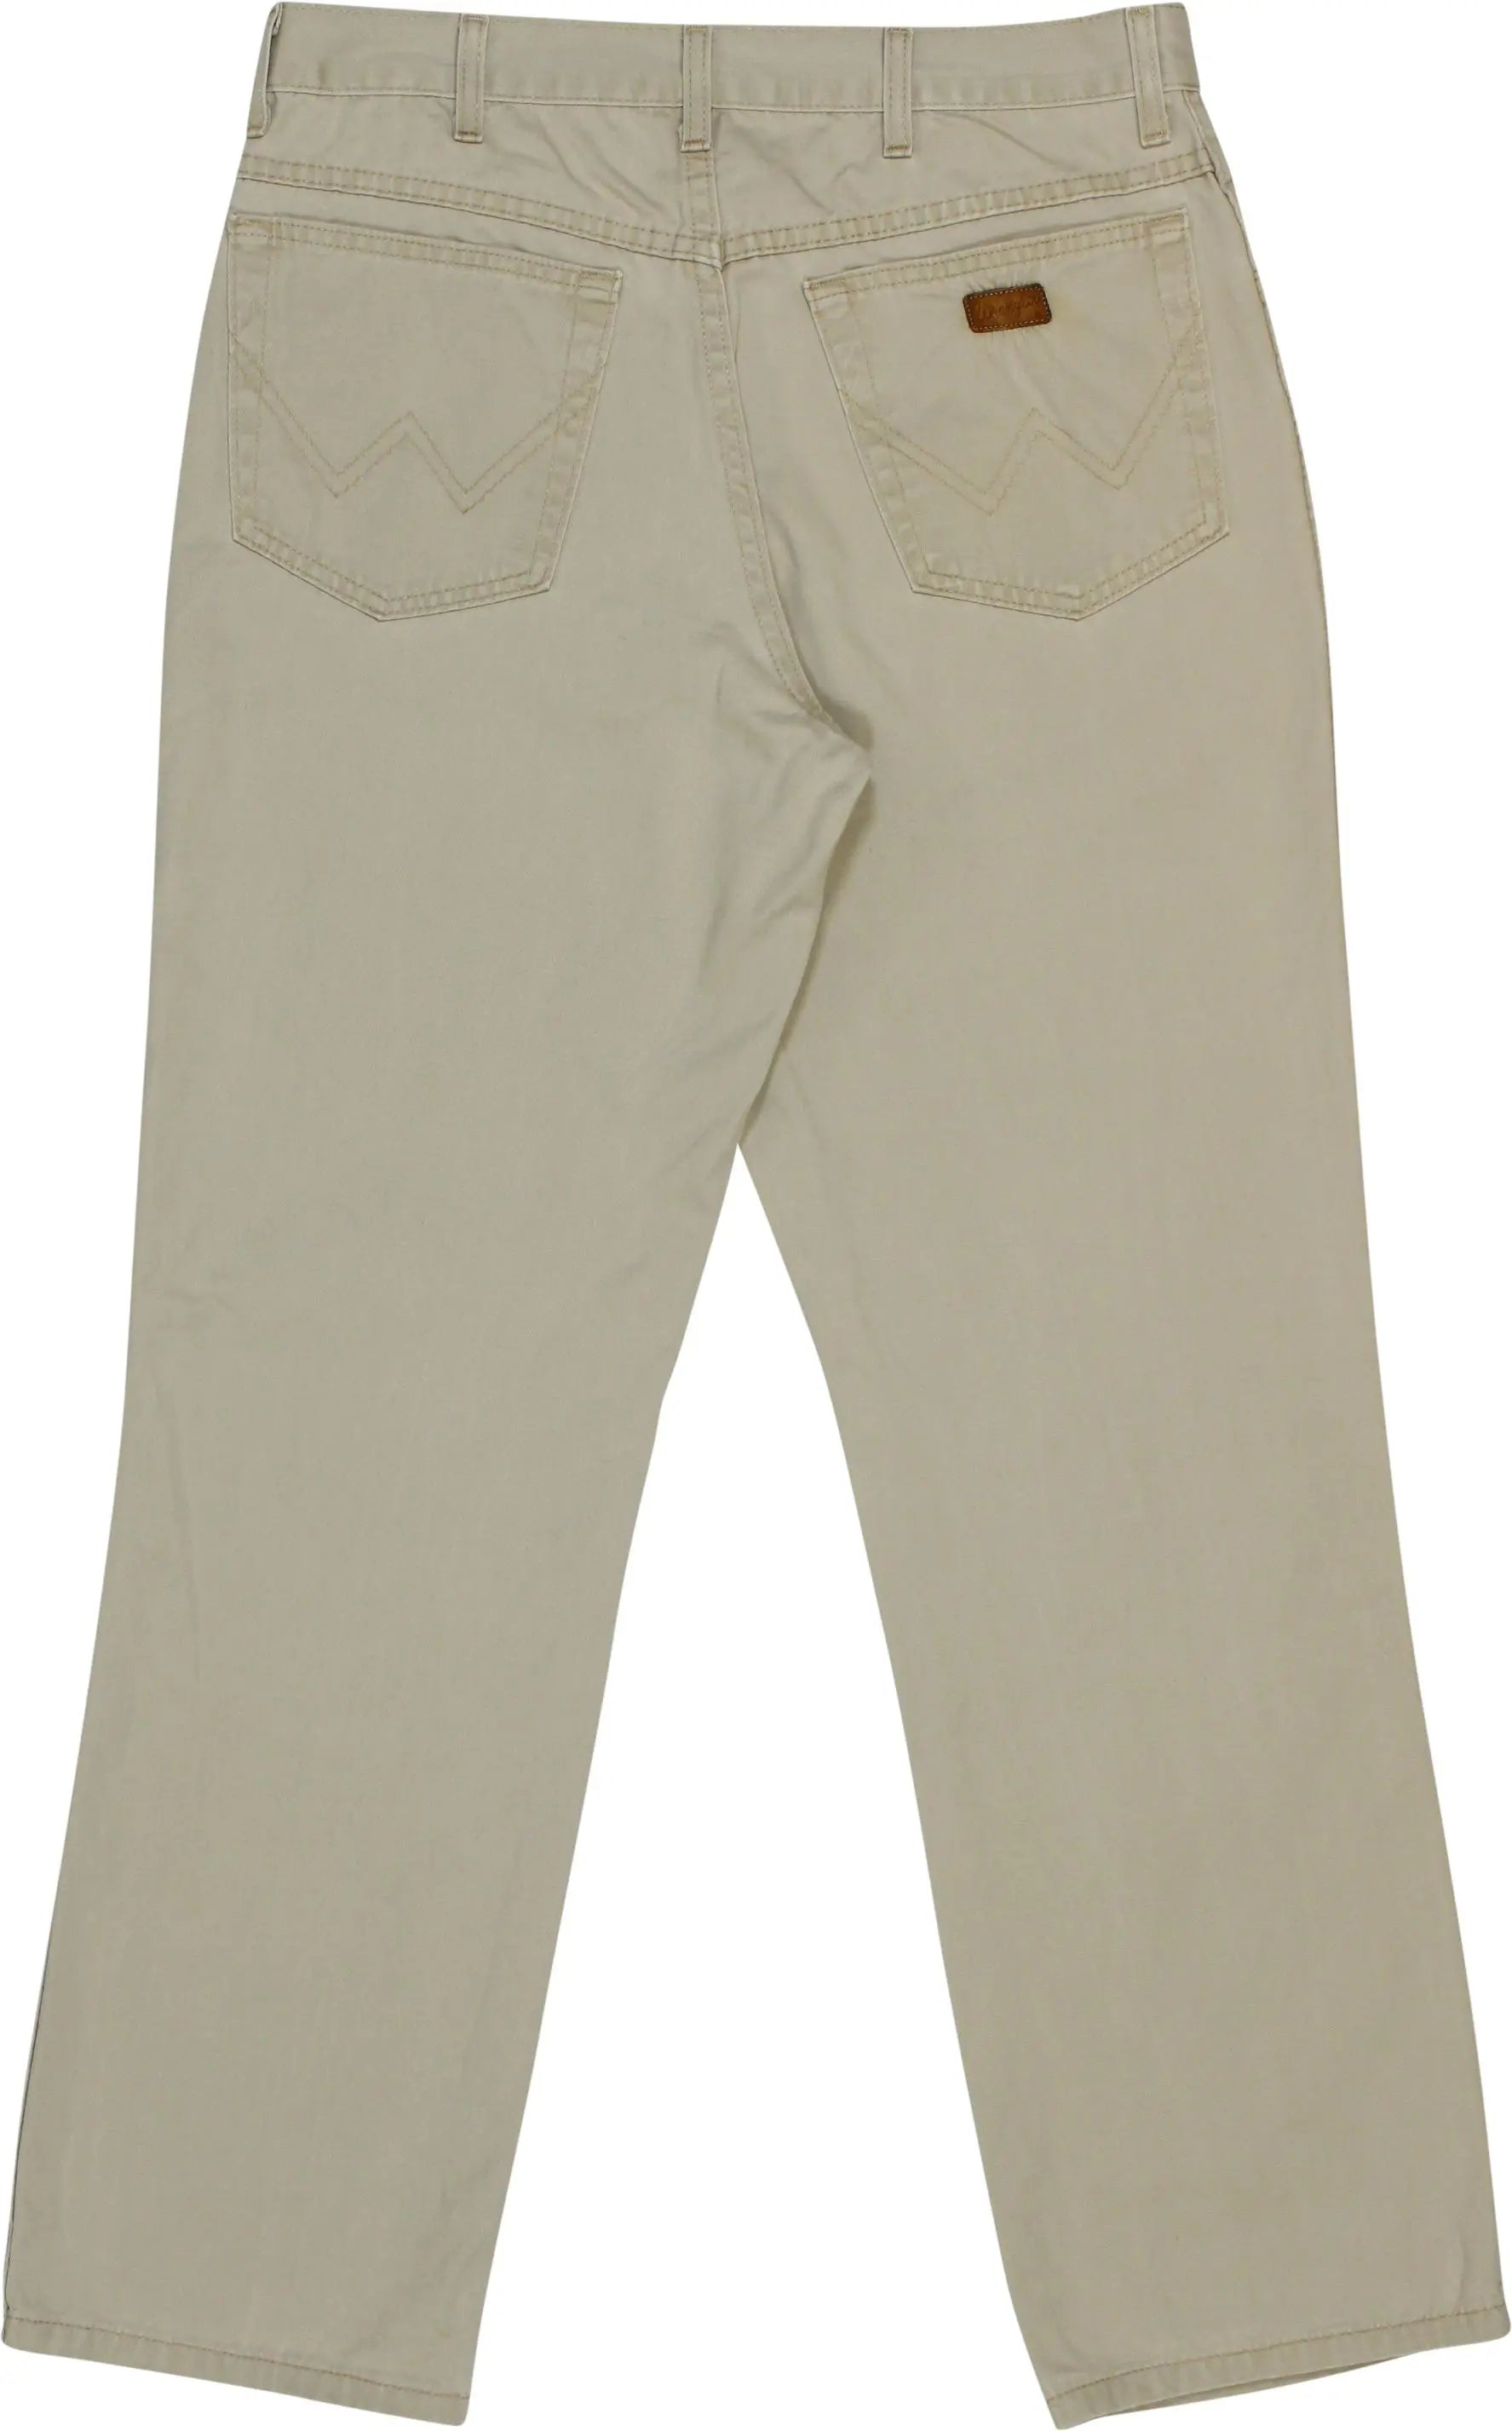 Wrangler - Wrangler Comfort Pants- ThriftTale.com - Vintage and second handclothing